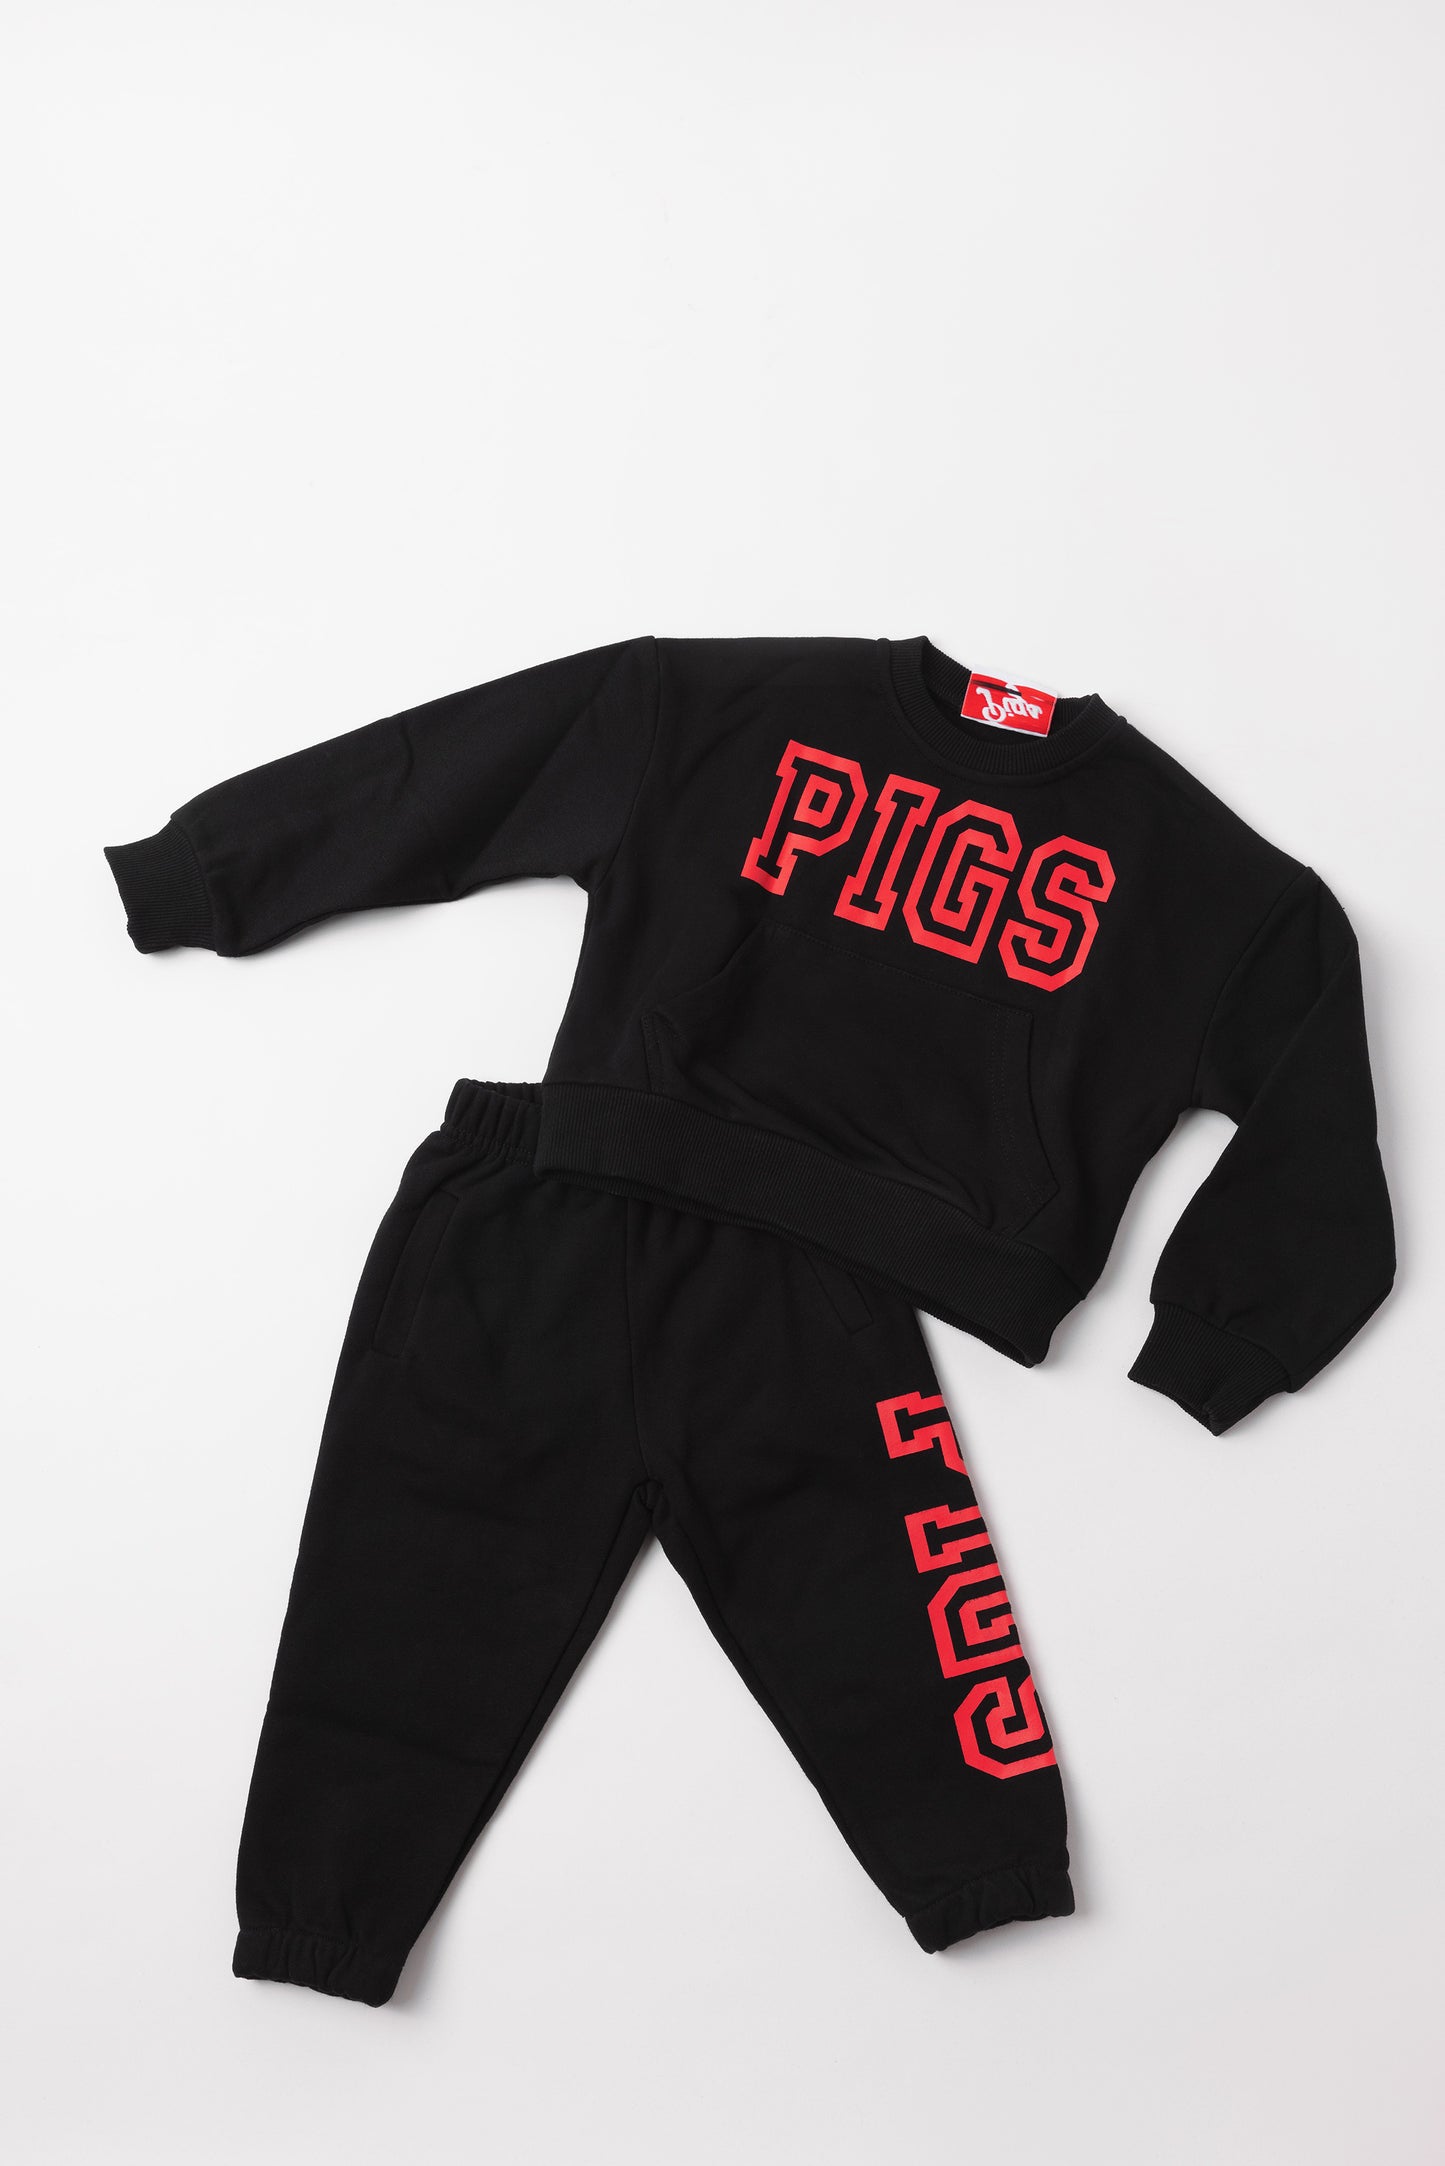 Kids - PIGSuit - Black